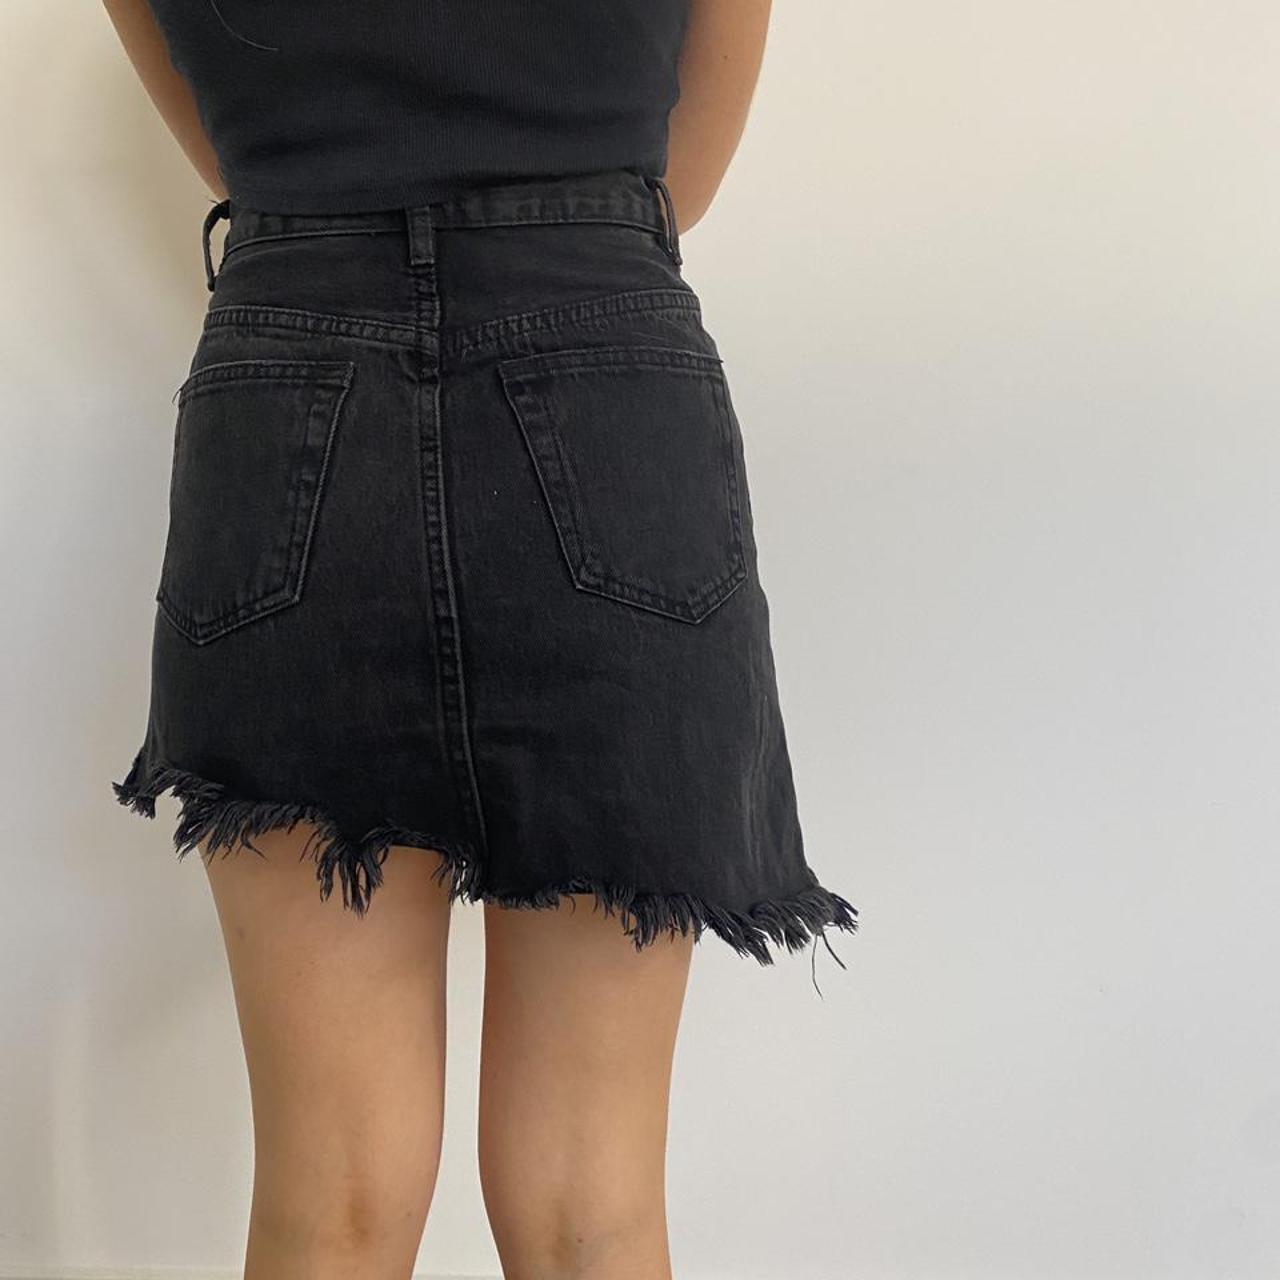 Asymmetric denim skirt. Black and high-waisted... - Depop